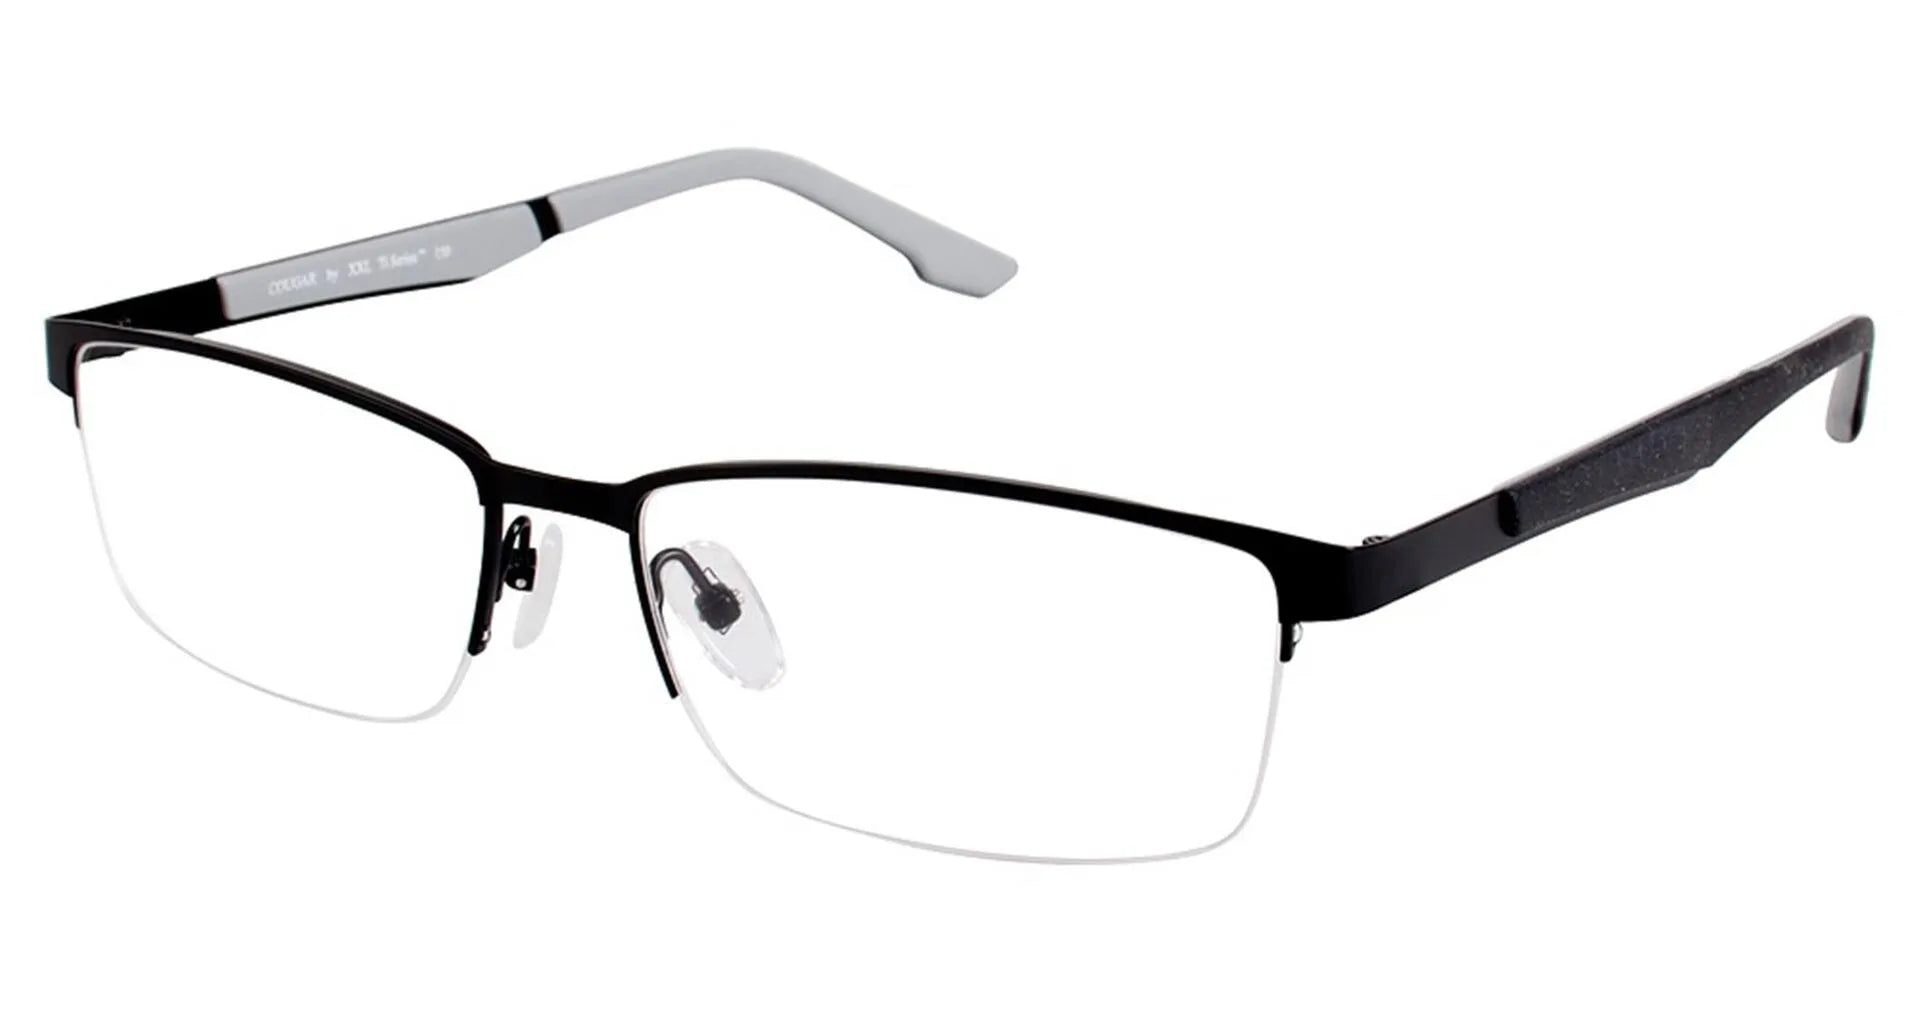 XXL Eyewear Cougar Eyeglasses Black